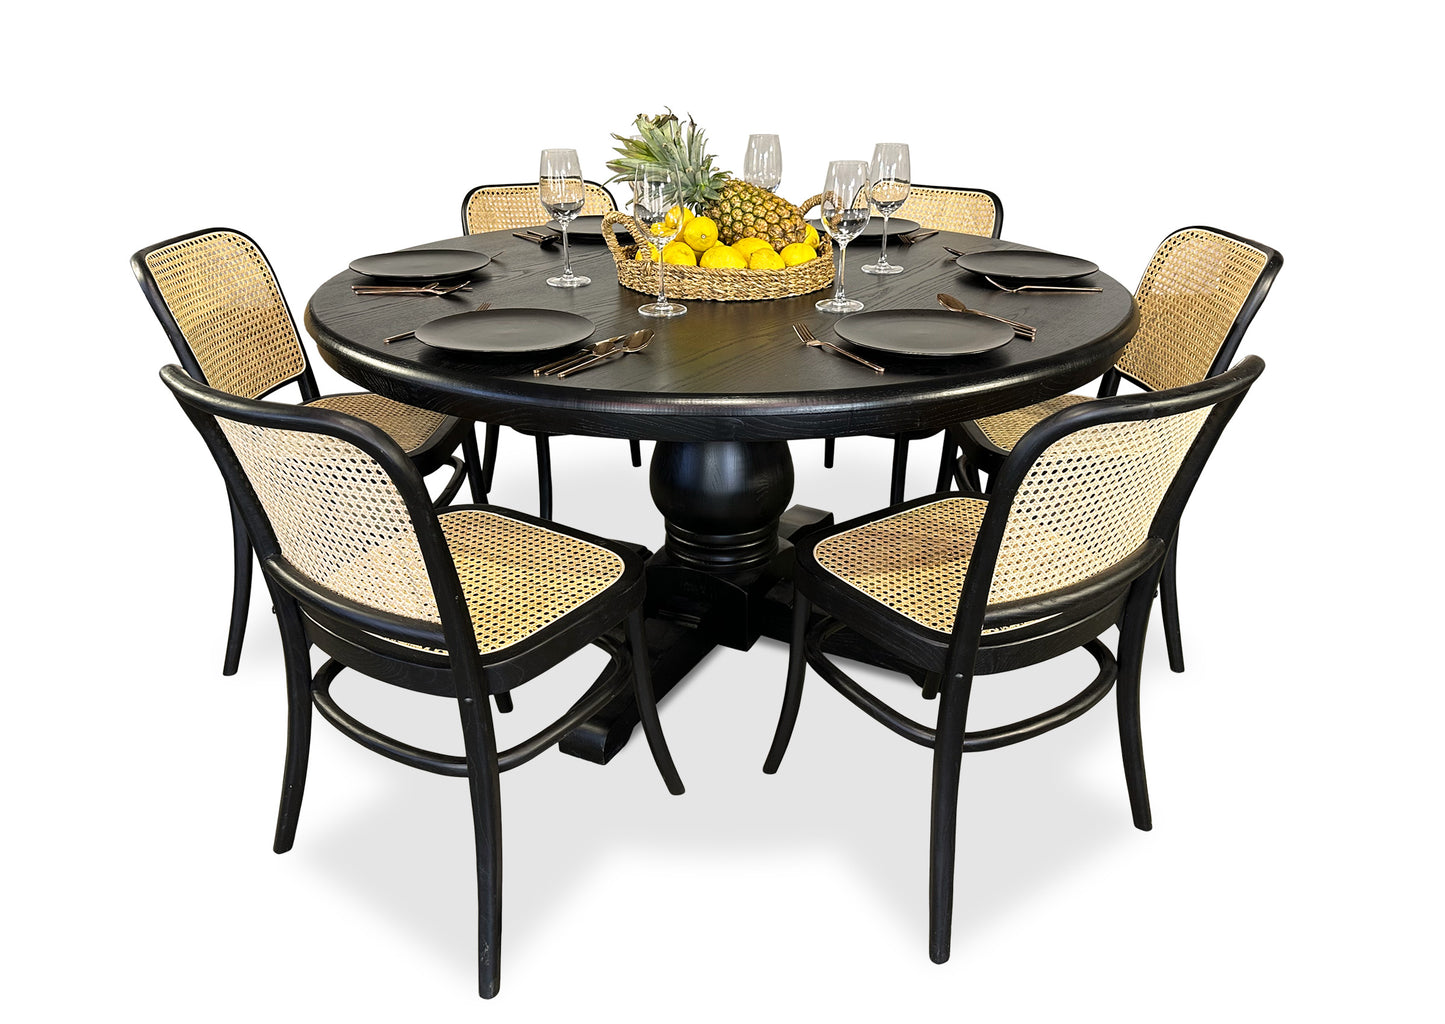 Parisienne Dining Table - Black (1500mm)